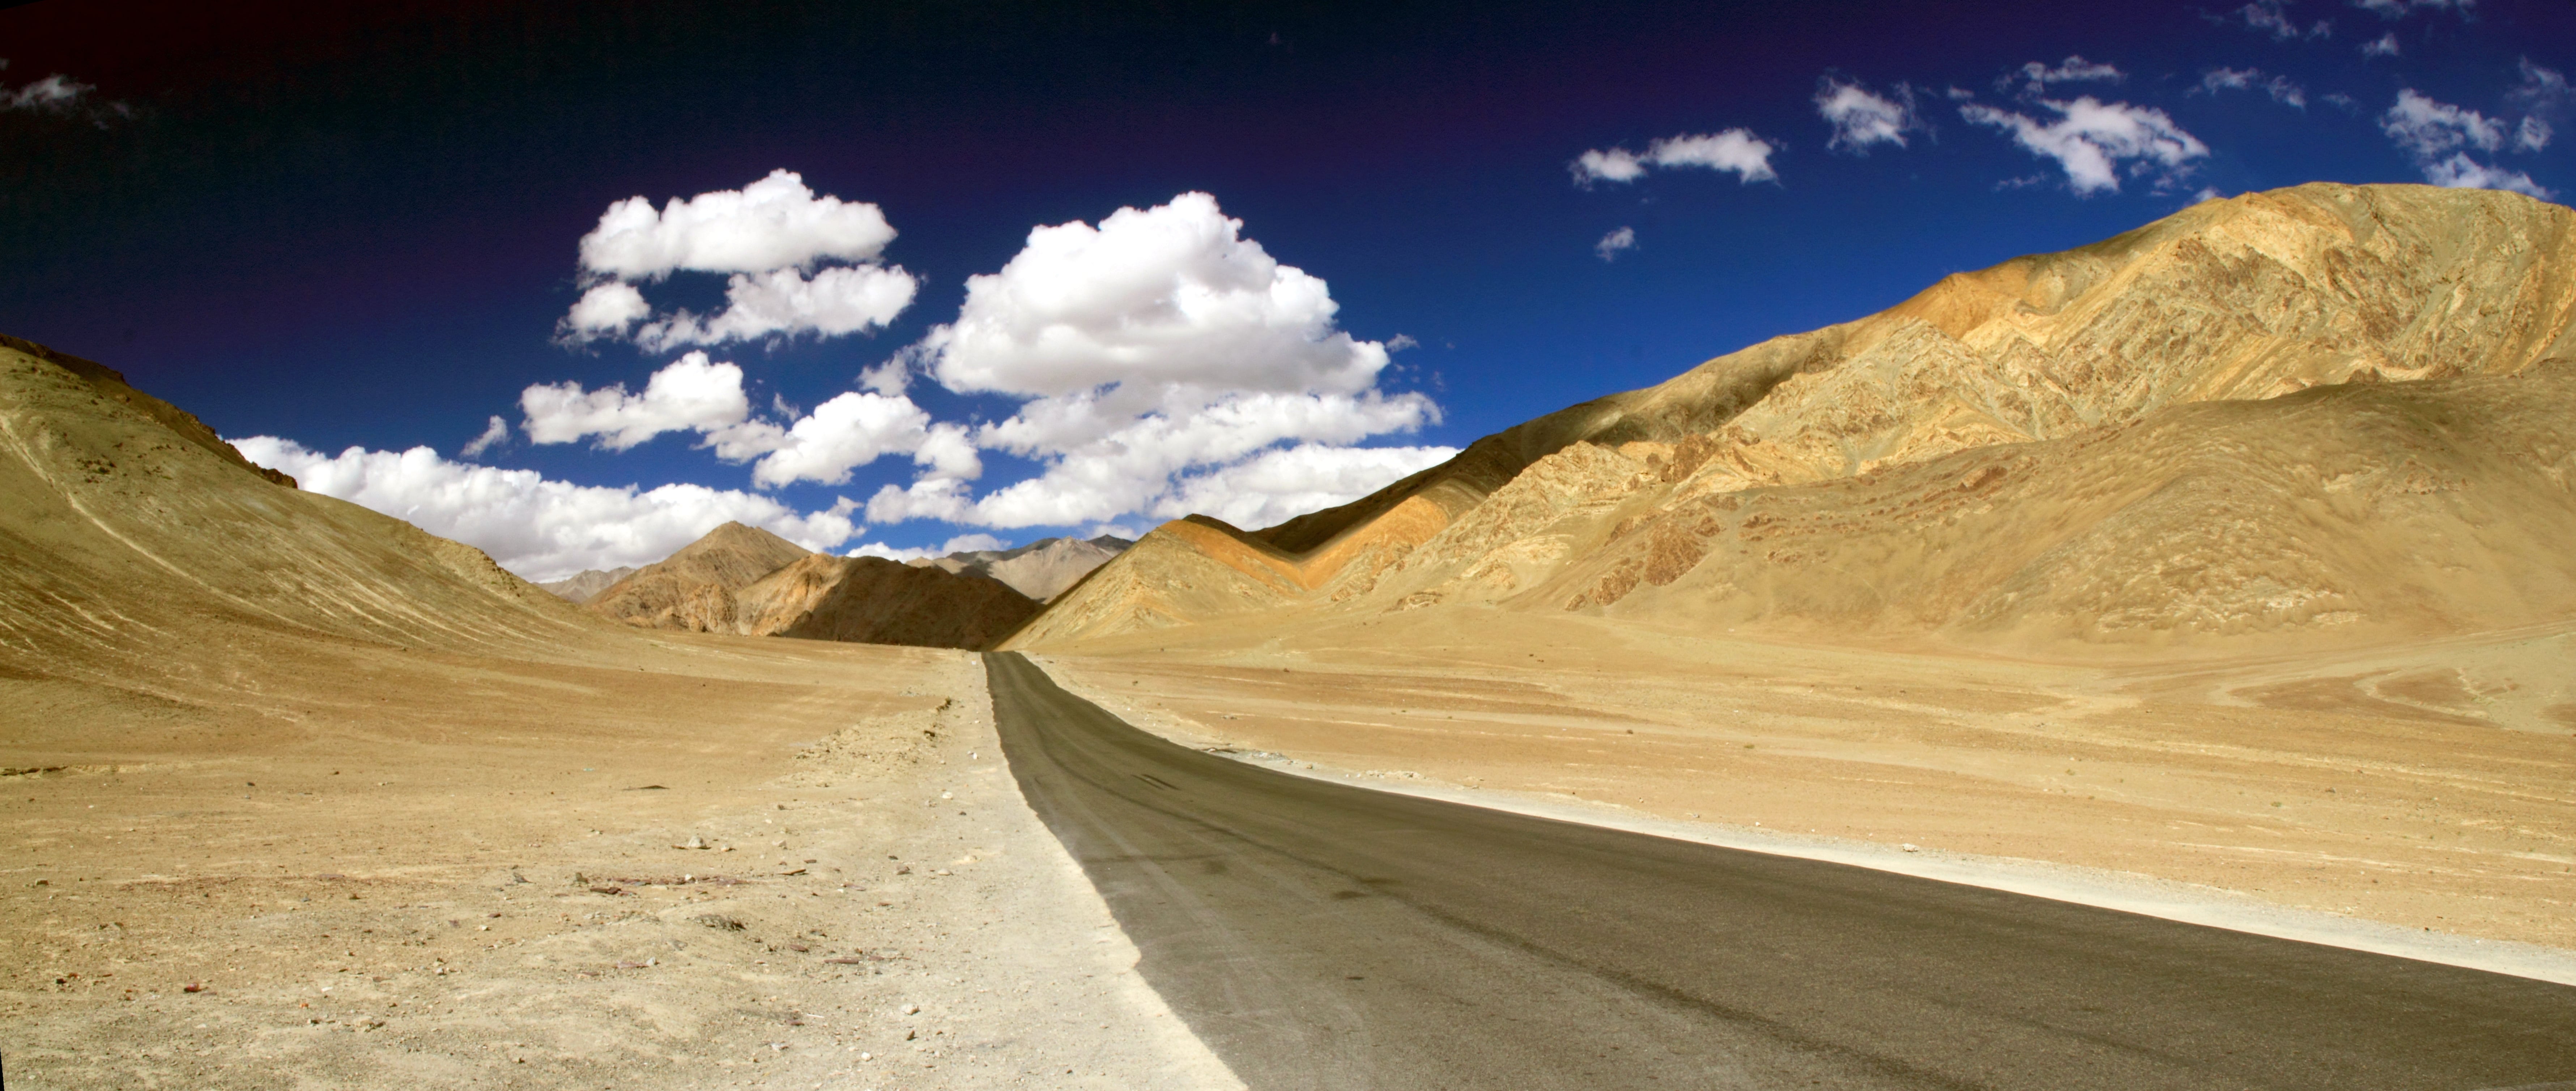 magnetic-hill-leh-ladakh-india-photos-images